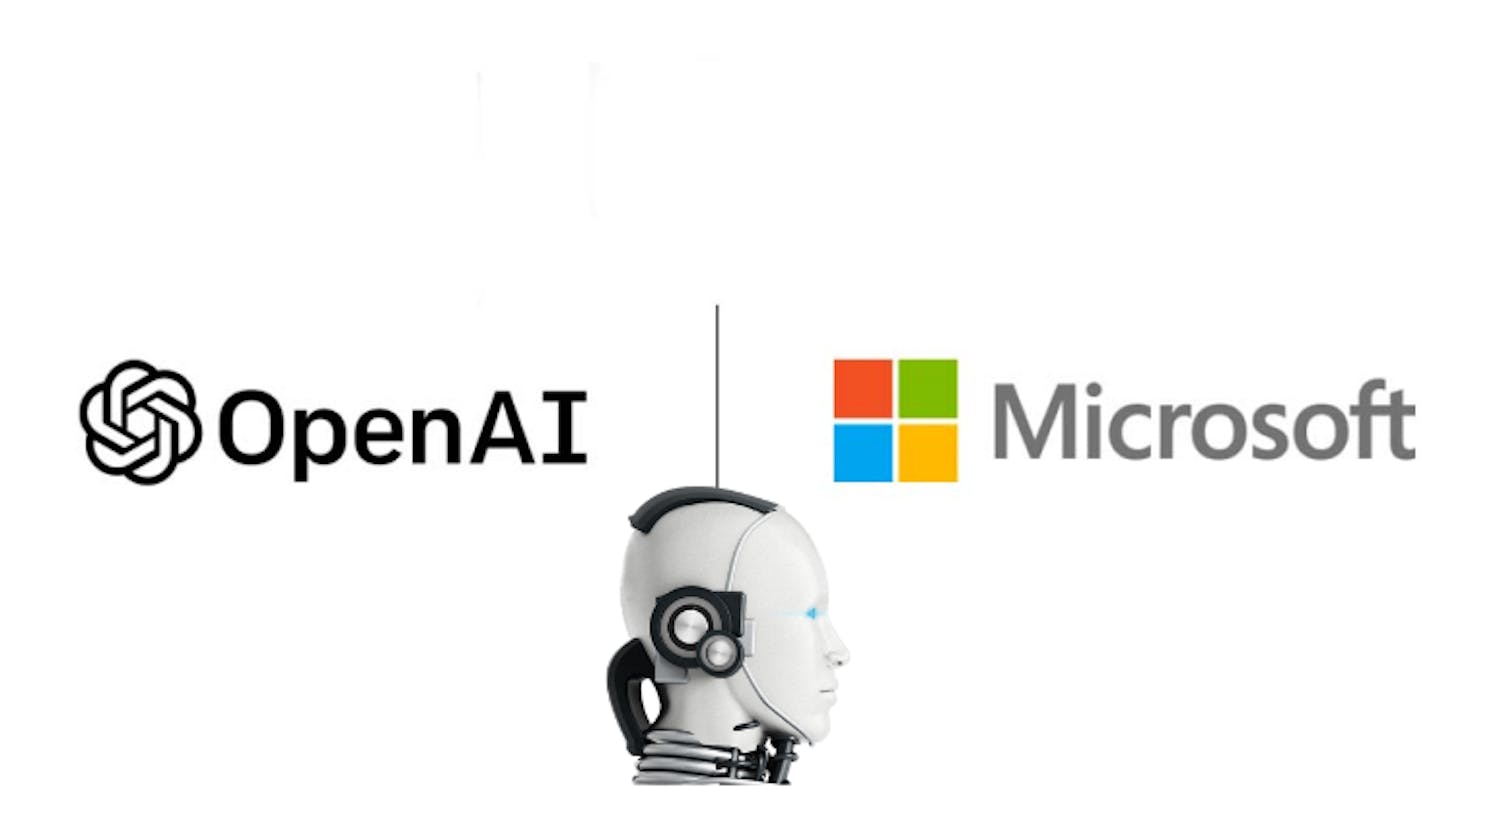 Microsoft + Open AI building next gamechanger chatbot ….